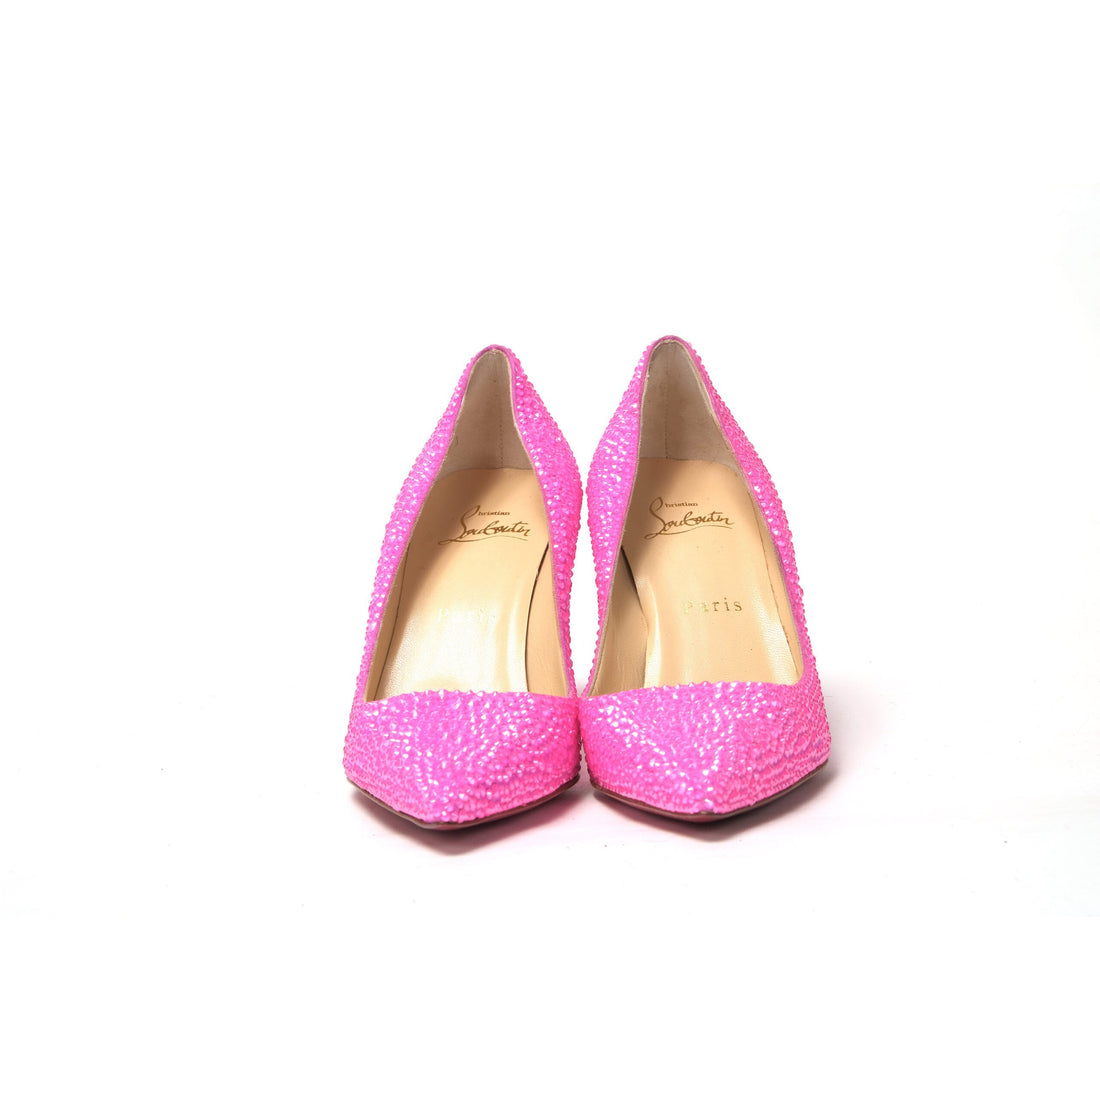 Christian Louboutin Hot Pink Embellished High Heels Pumps